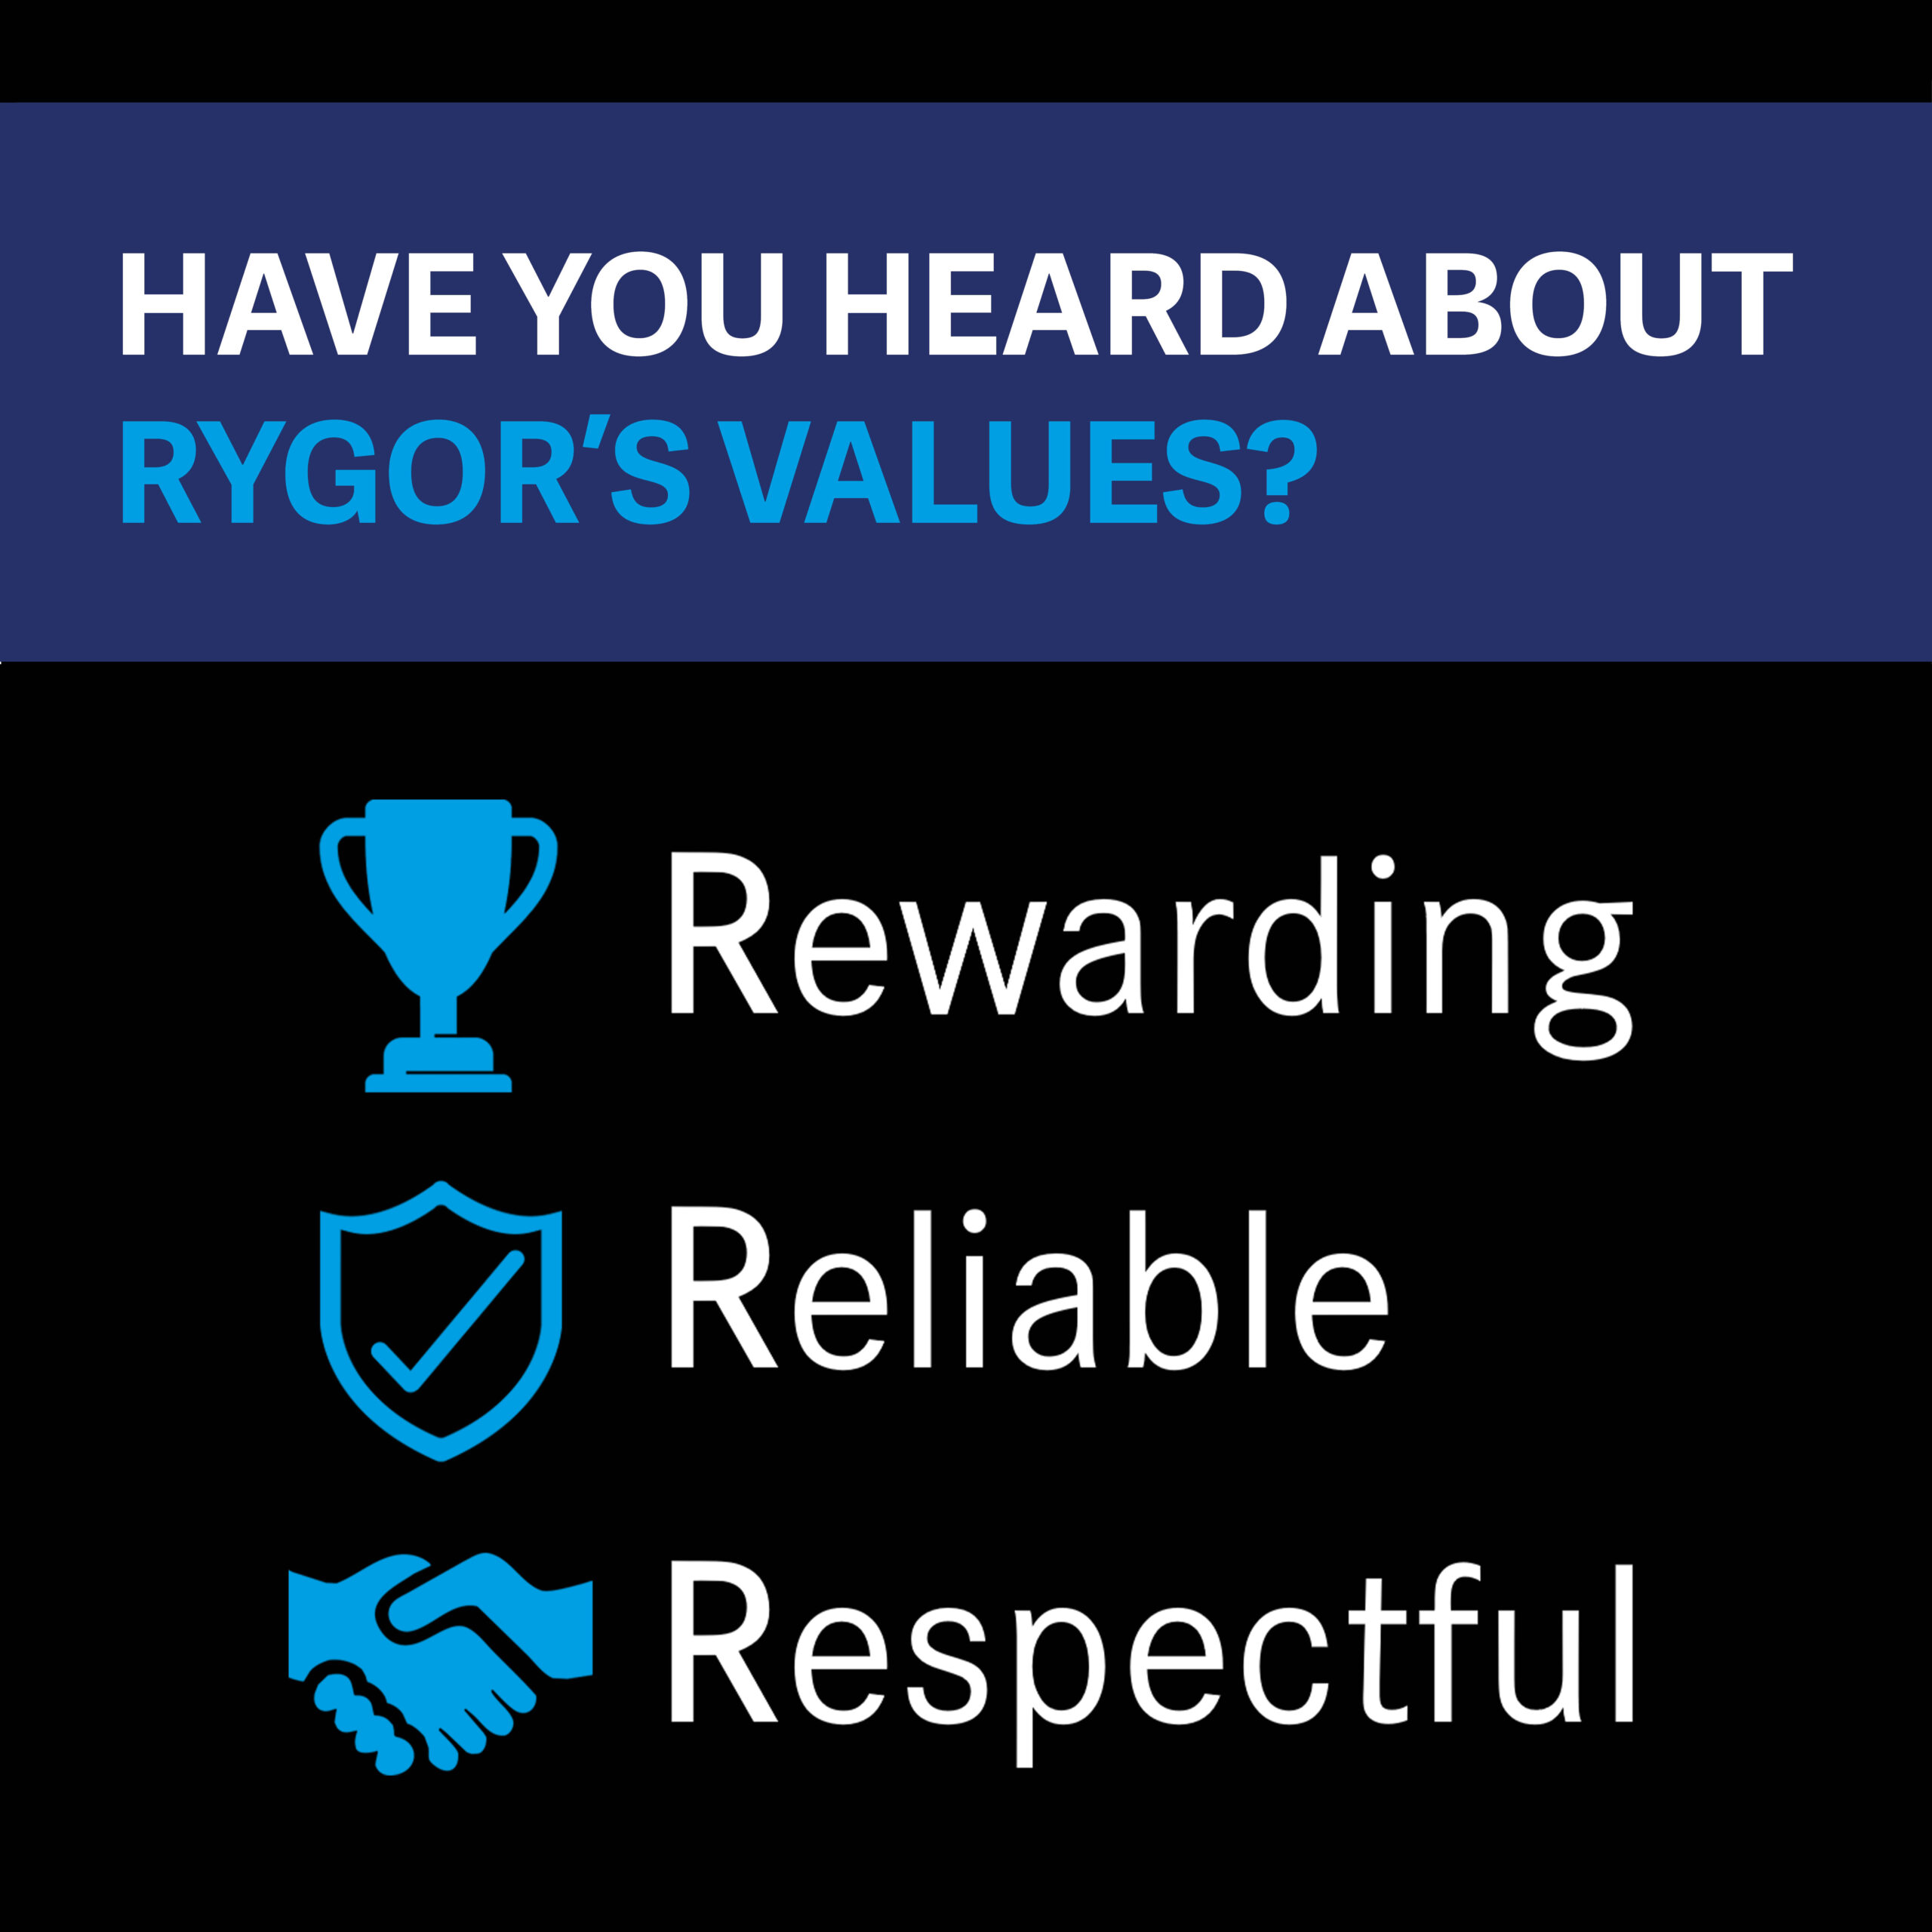 Rygor Auto Values 1600px x 1600px Image3 1 scaled